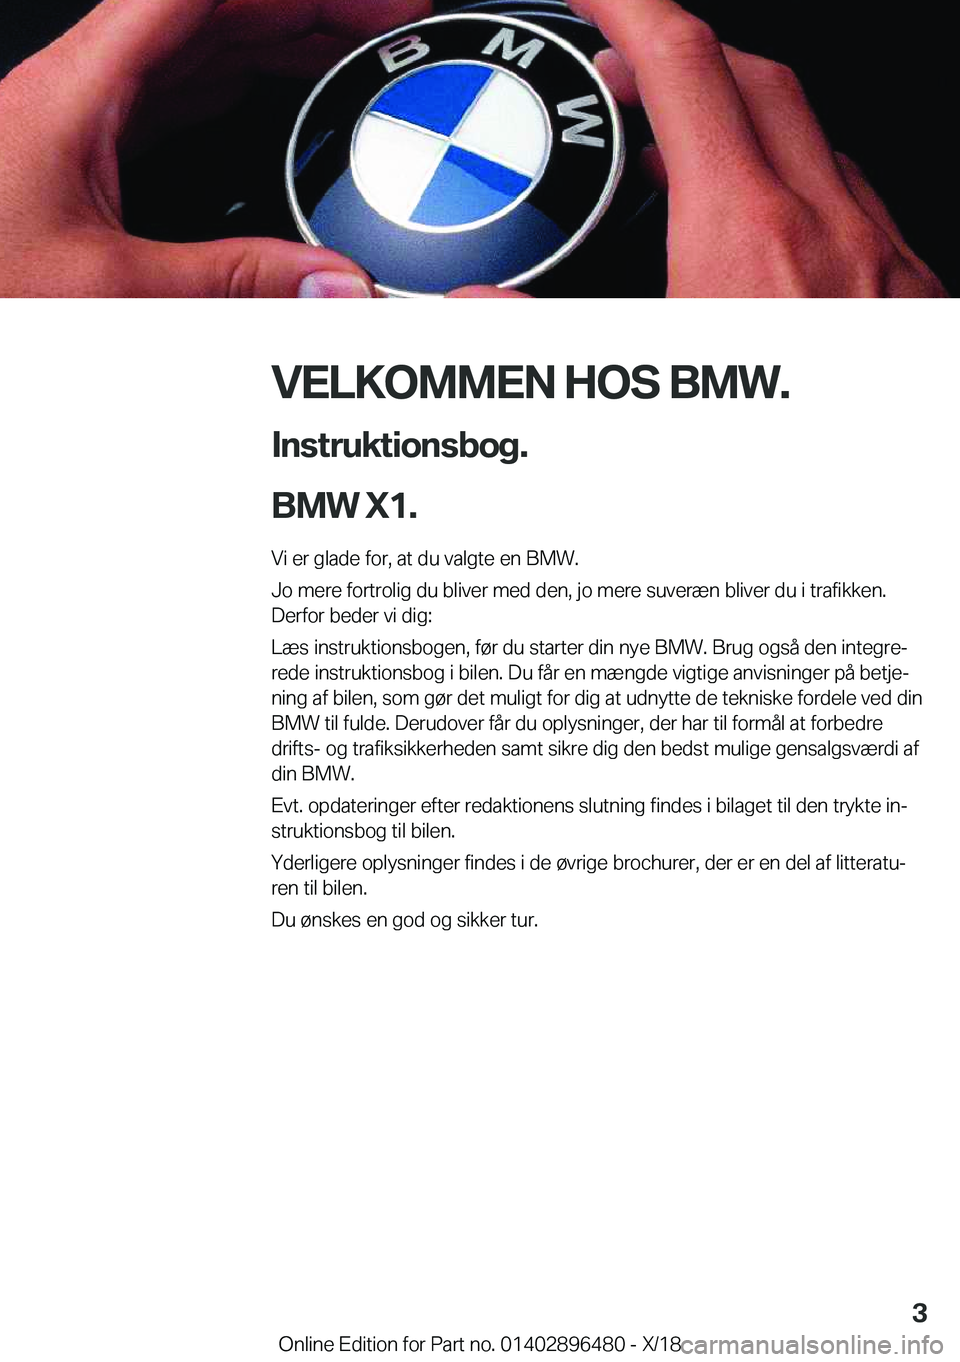 BMW X1 2019  InstruktionsbØger (in Danish) �V�E�L�K�O�M�M�E�N��H�O�S��B�M�W�.
�I�n�s�t�r�u�k�t�i�o�n�s�b�o�g�.
�B�M�W��X�1�. �V�i��e�r��g�l�a�d�e��f�o�r�,��a�t��d�u��v�a�l�g�t�e��e�n��B�M�W�.
�J�o��m�e�r�e��f�o�r�t�r�o�l�i�g��d�u